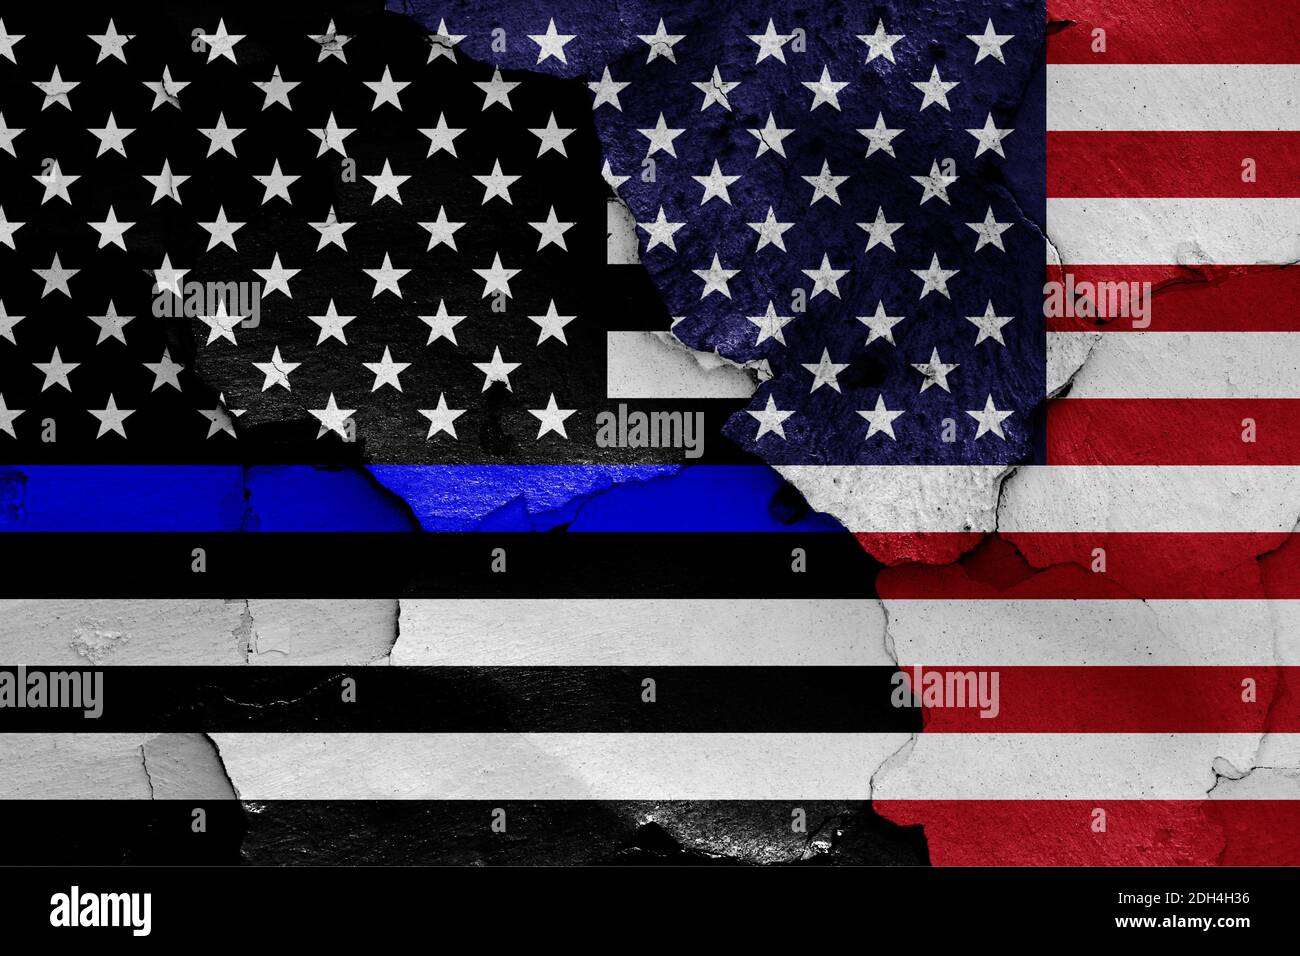 Blue lives matter flag and USA flag Stock Photo